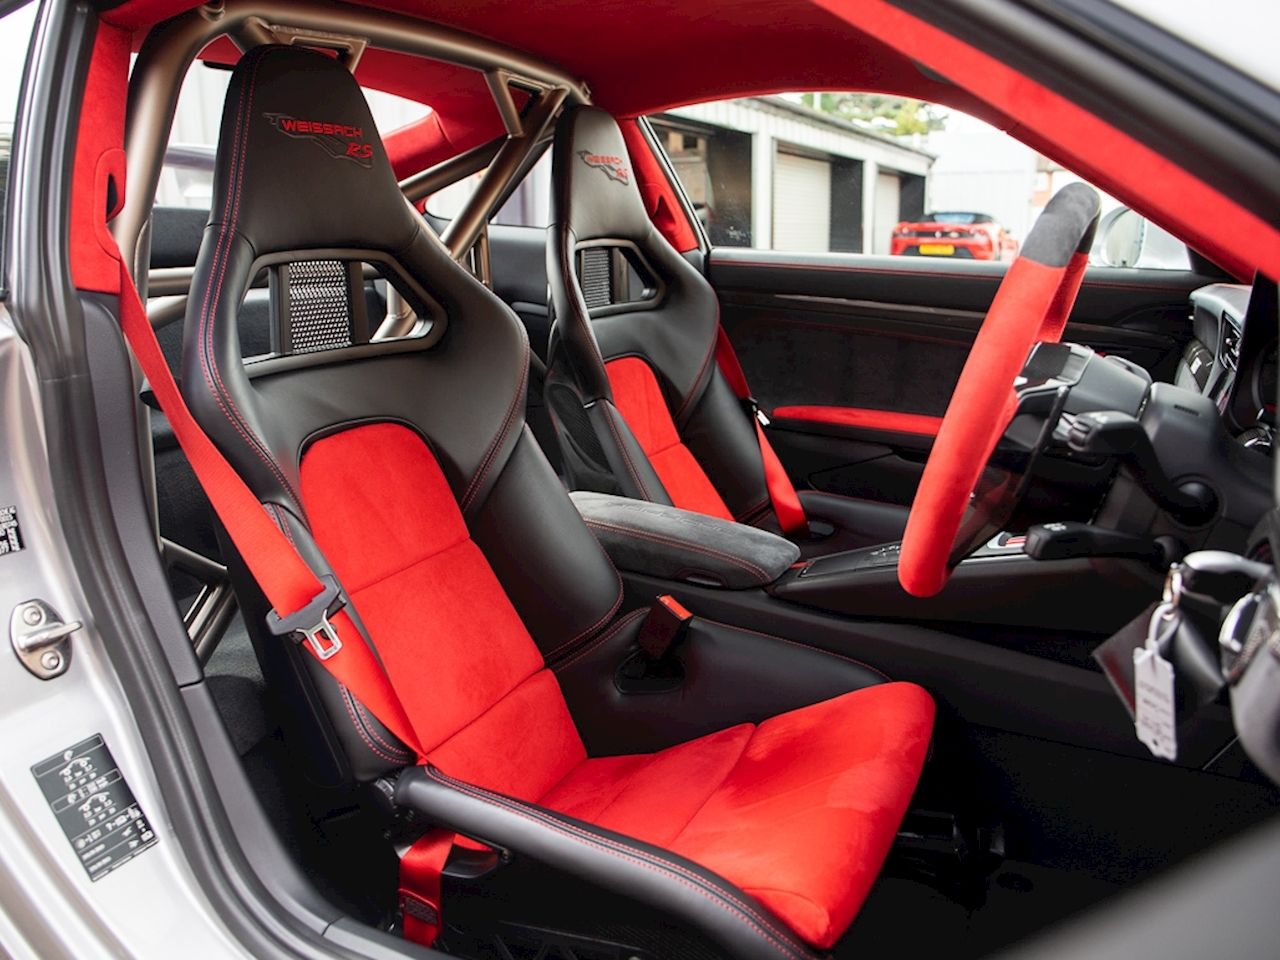 the Porsche 911 GT2 RS has an Exquisite Interior.